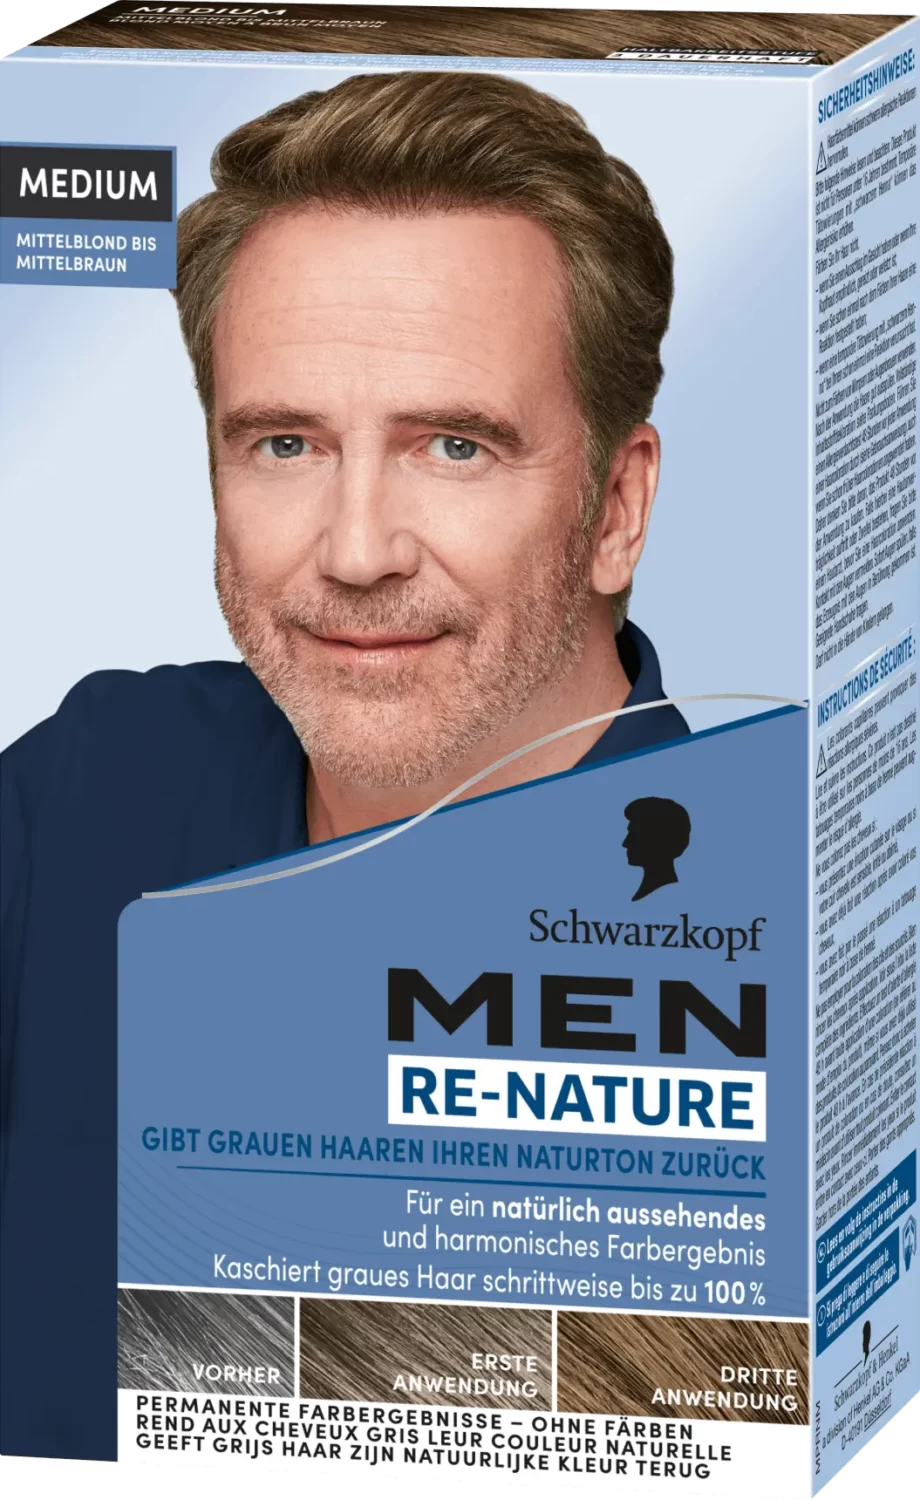 schwarzkopf men re-nature medium anti gray dye free hair color restorer